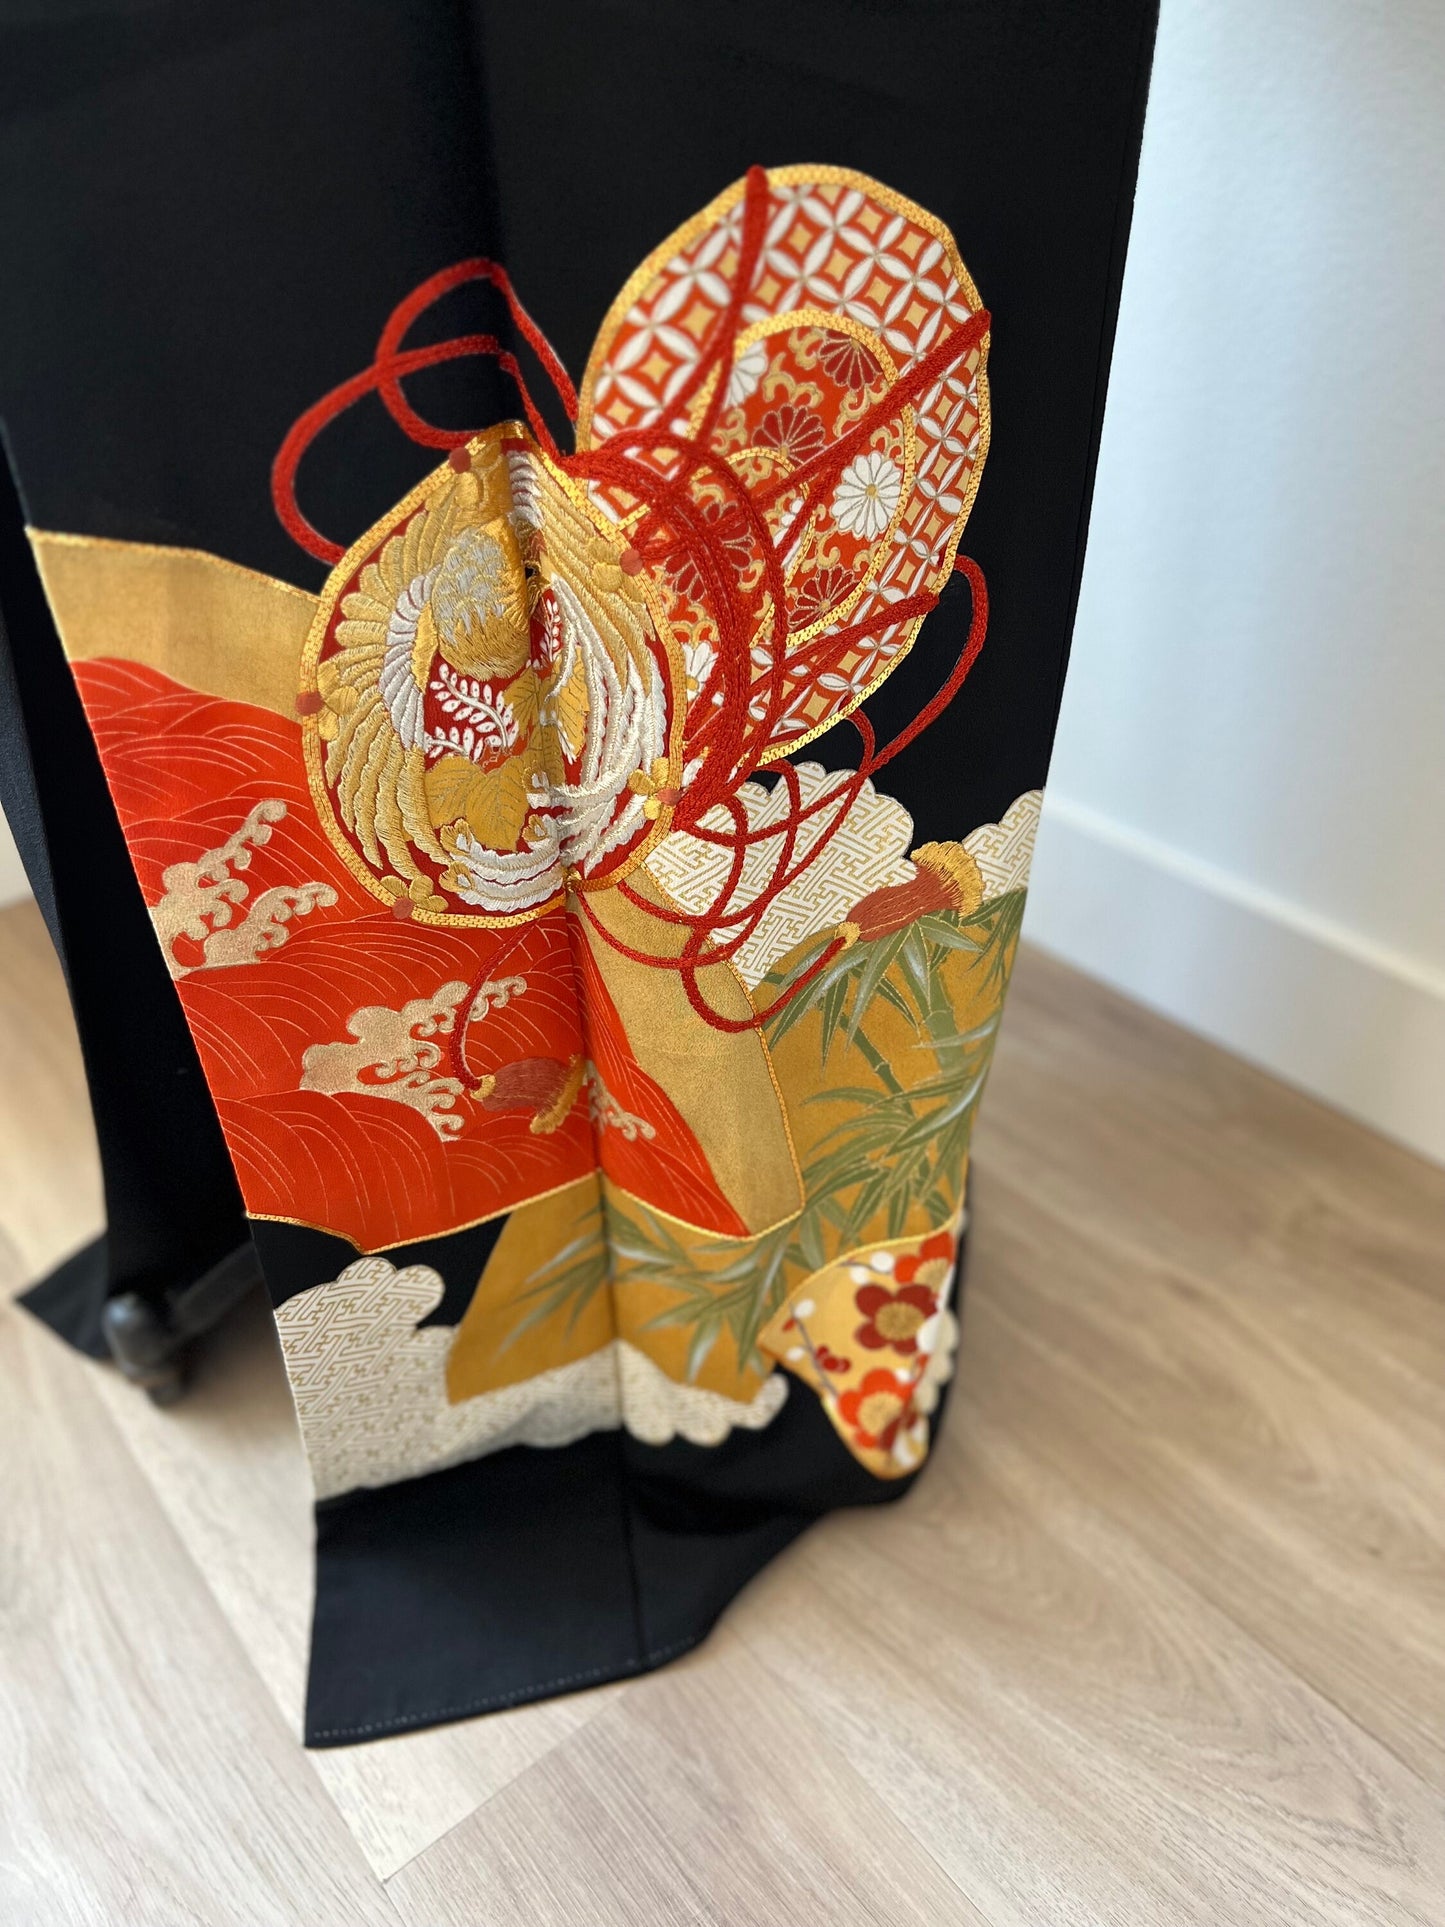 Antique 1930s Japanese silk Kurotomesode kimono | Black | Tsuzumi | Embroidery